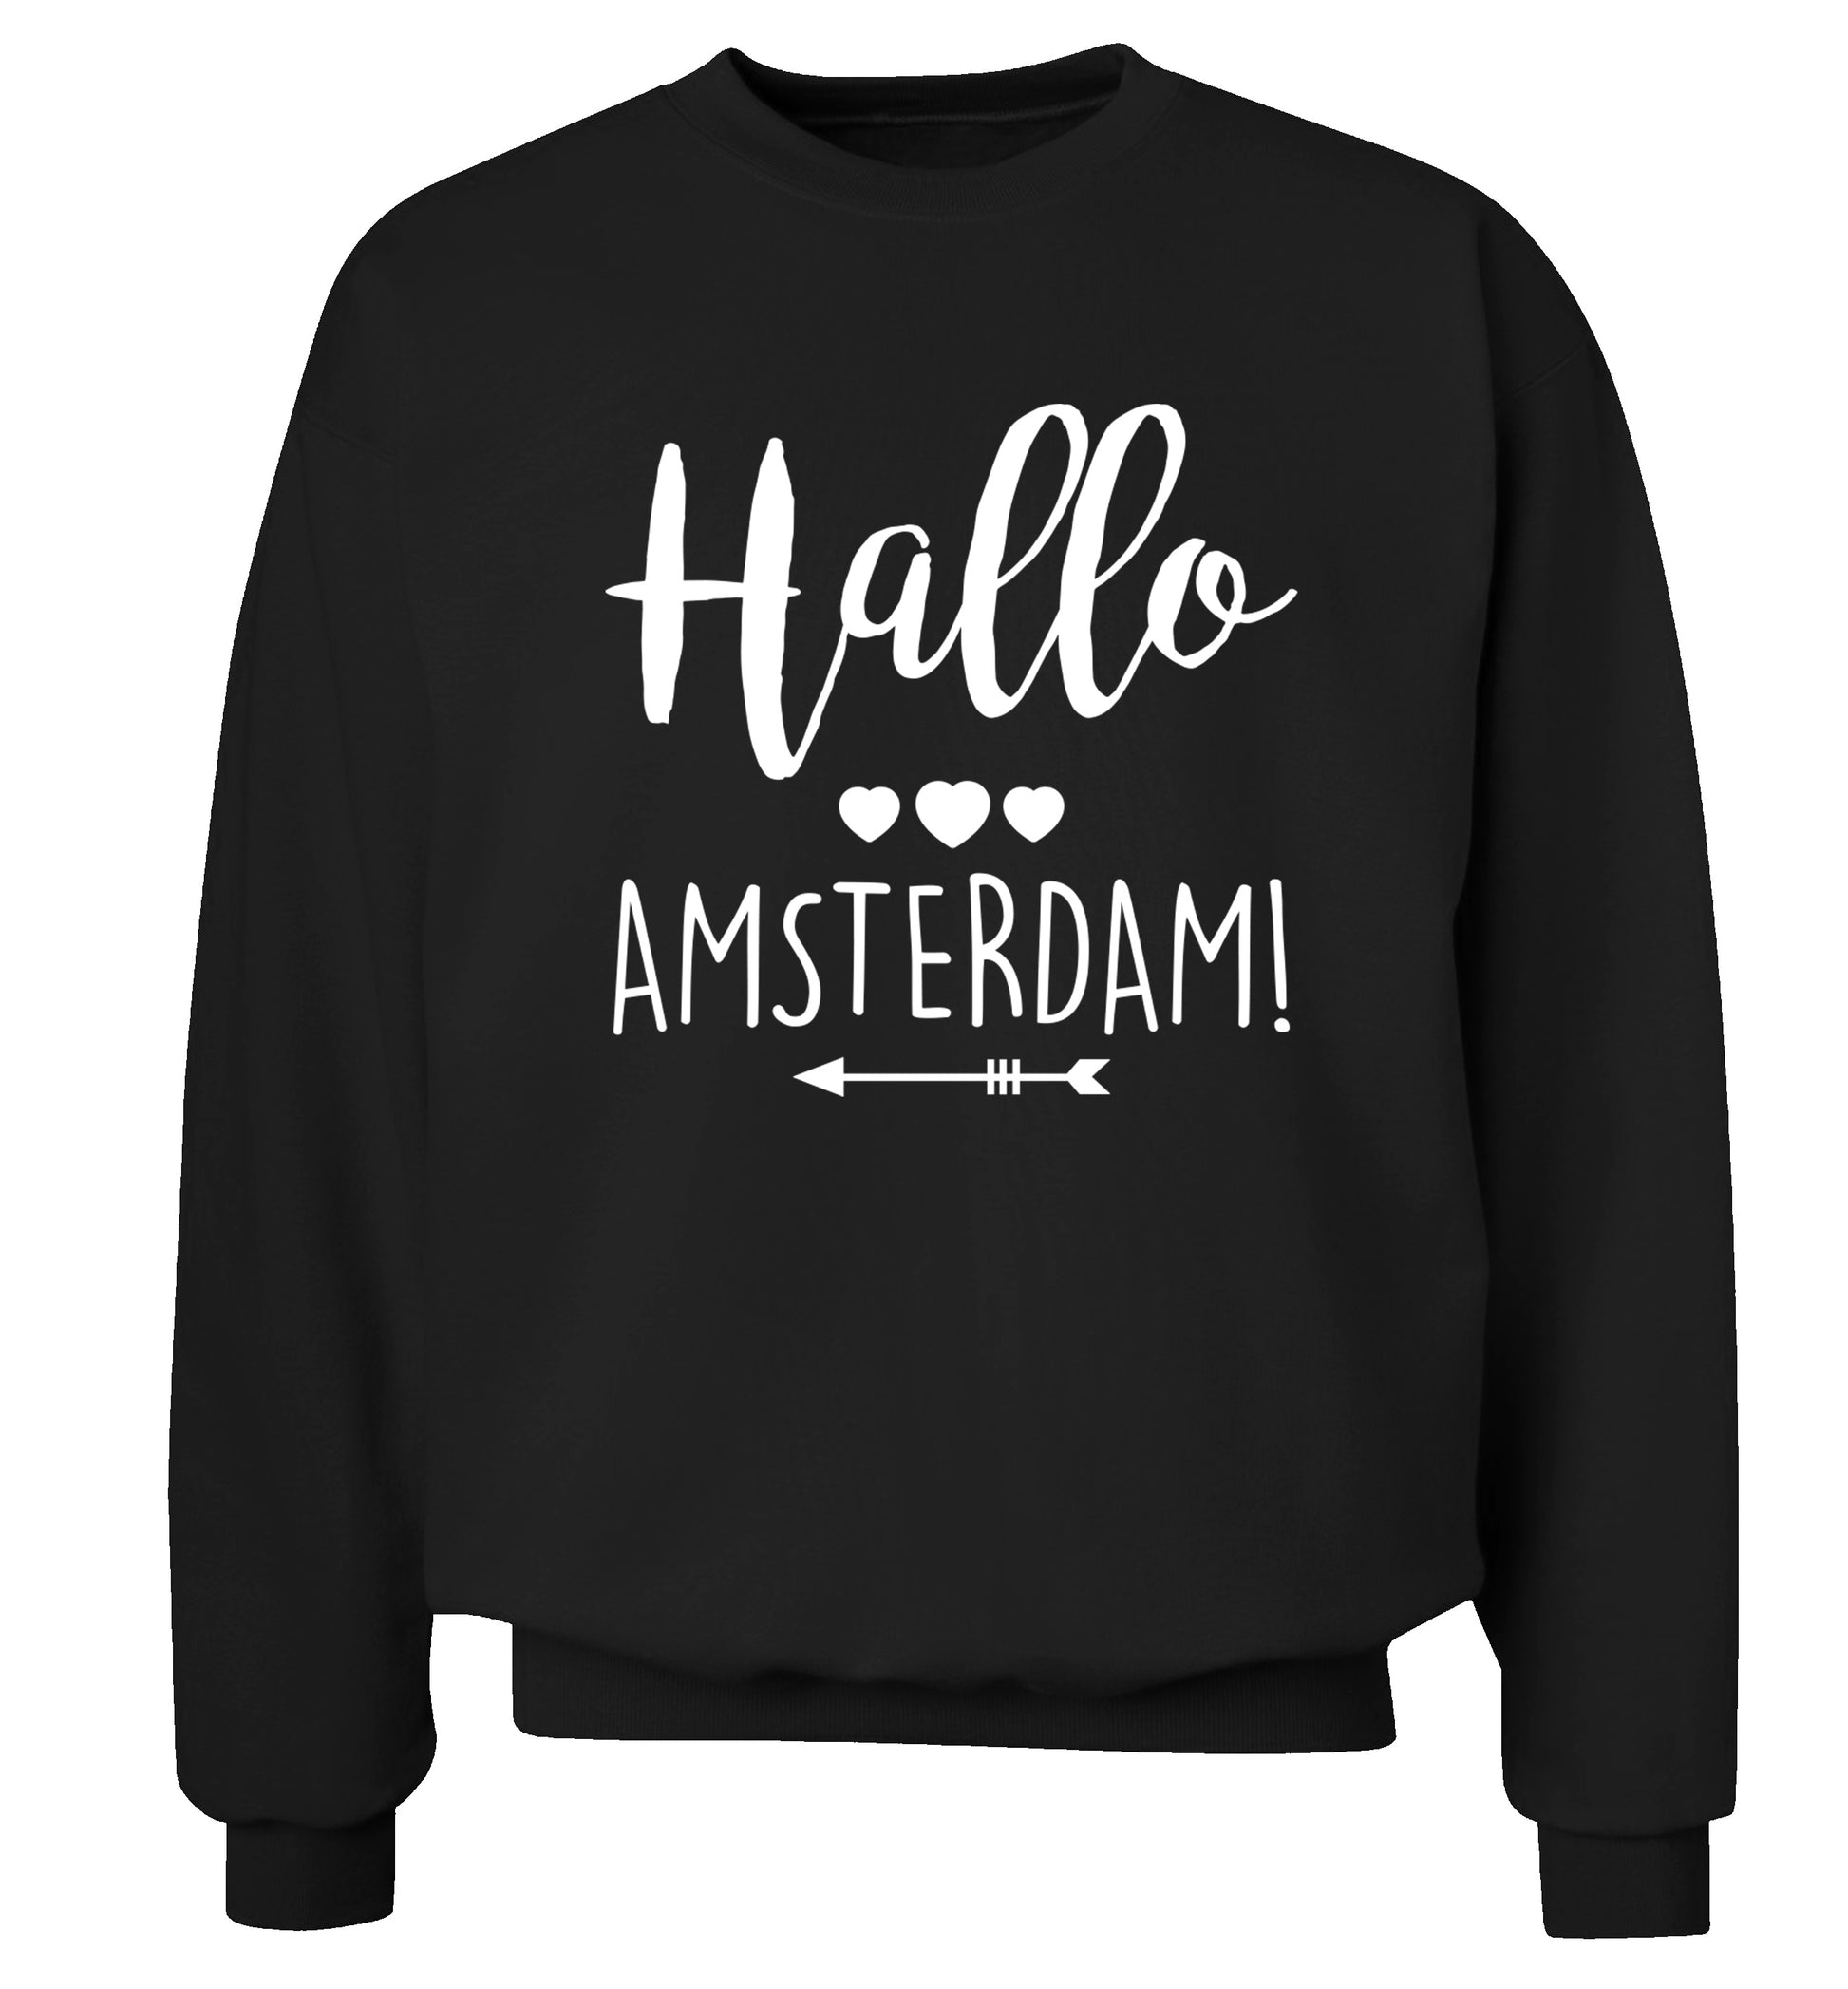 Hallo Amsterdam Adult's unisex black Sweater 2XL